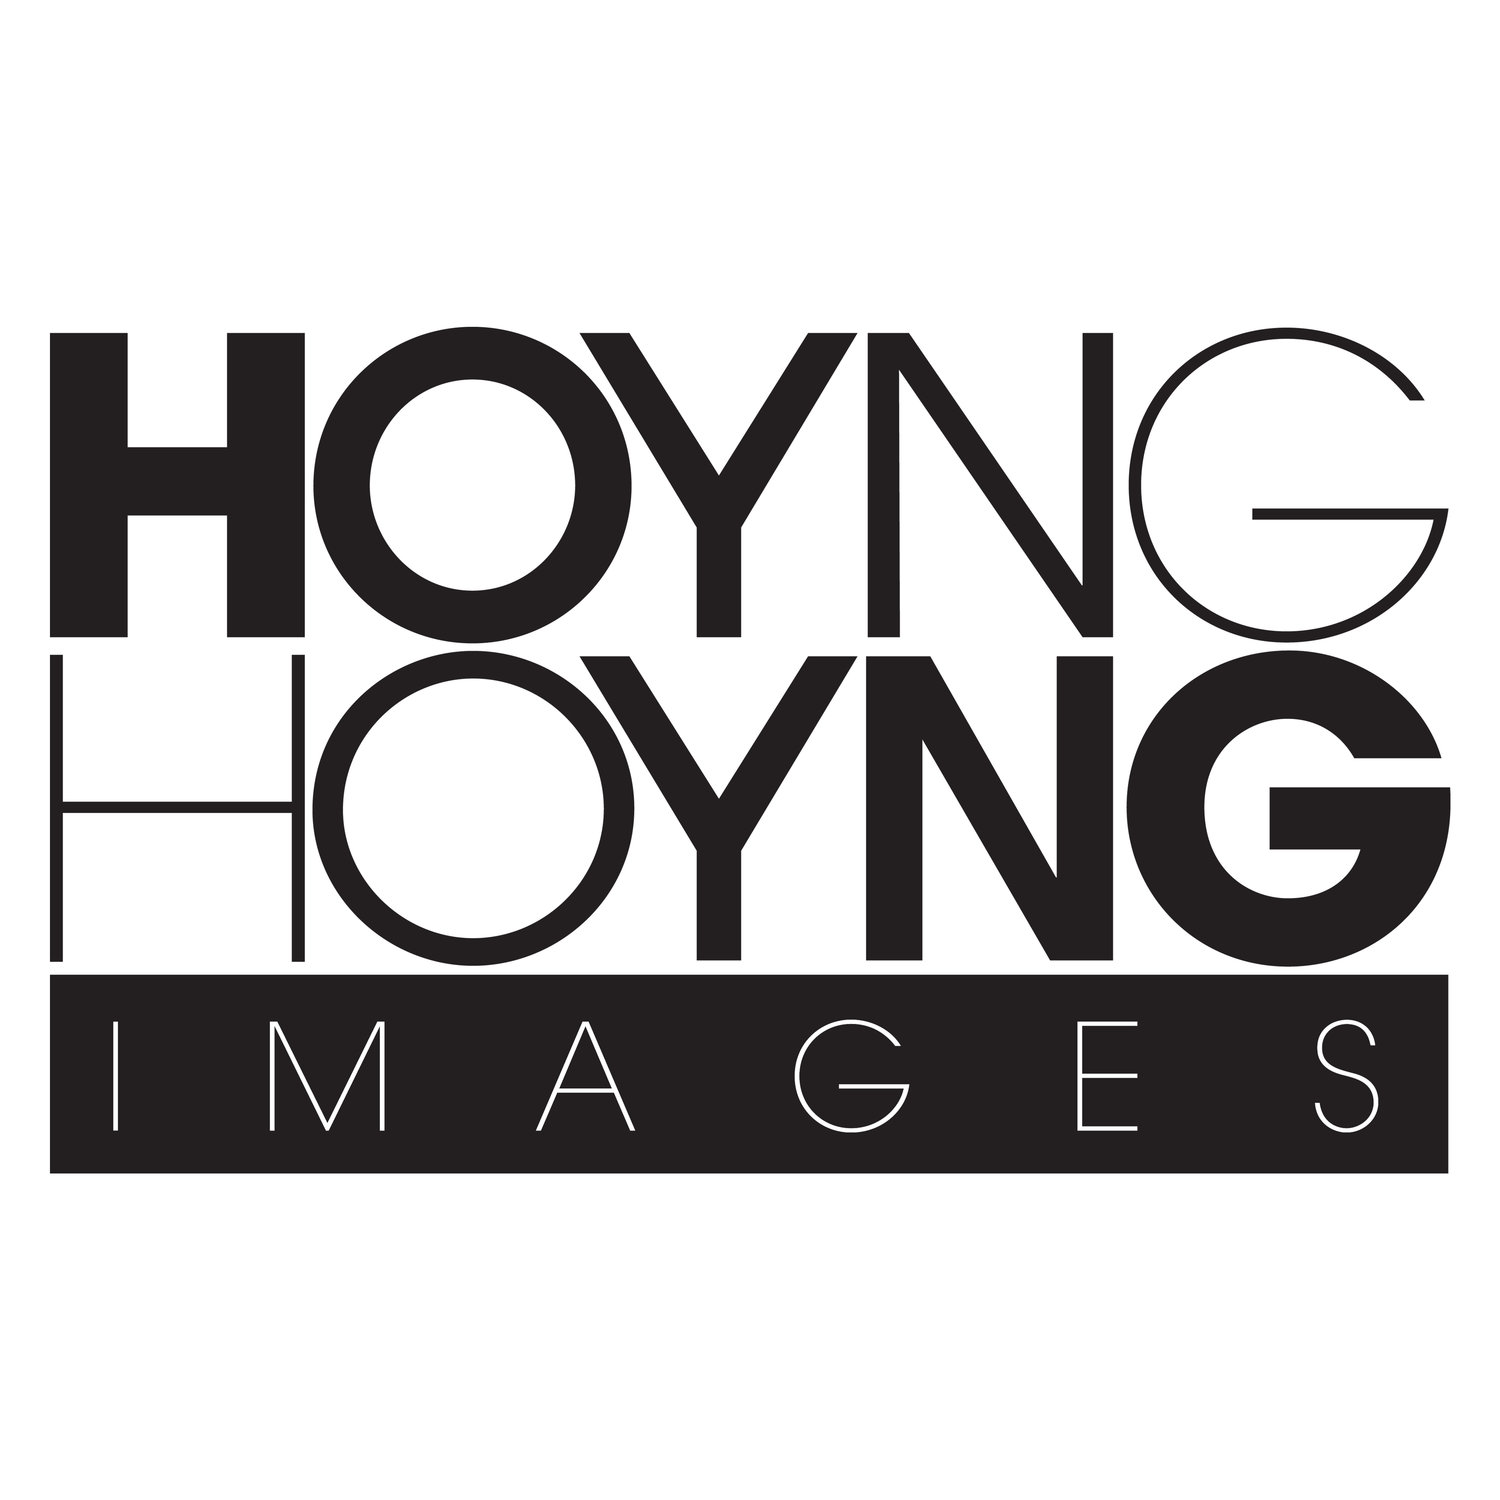 HOYNG IMAGES